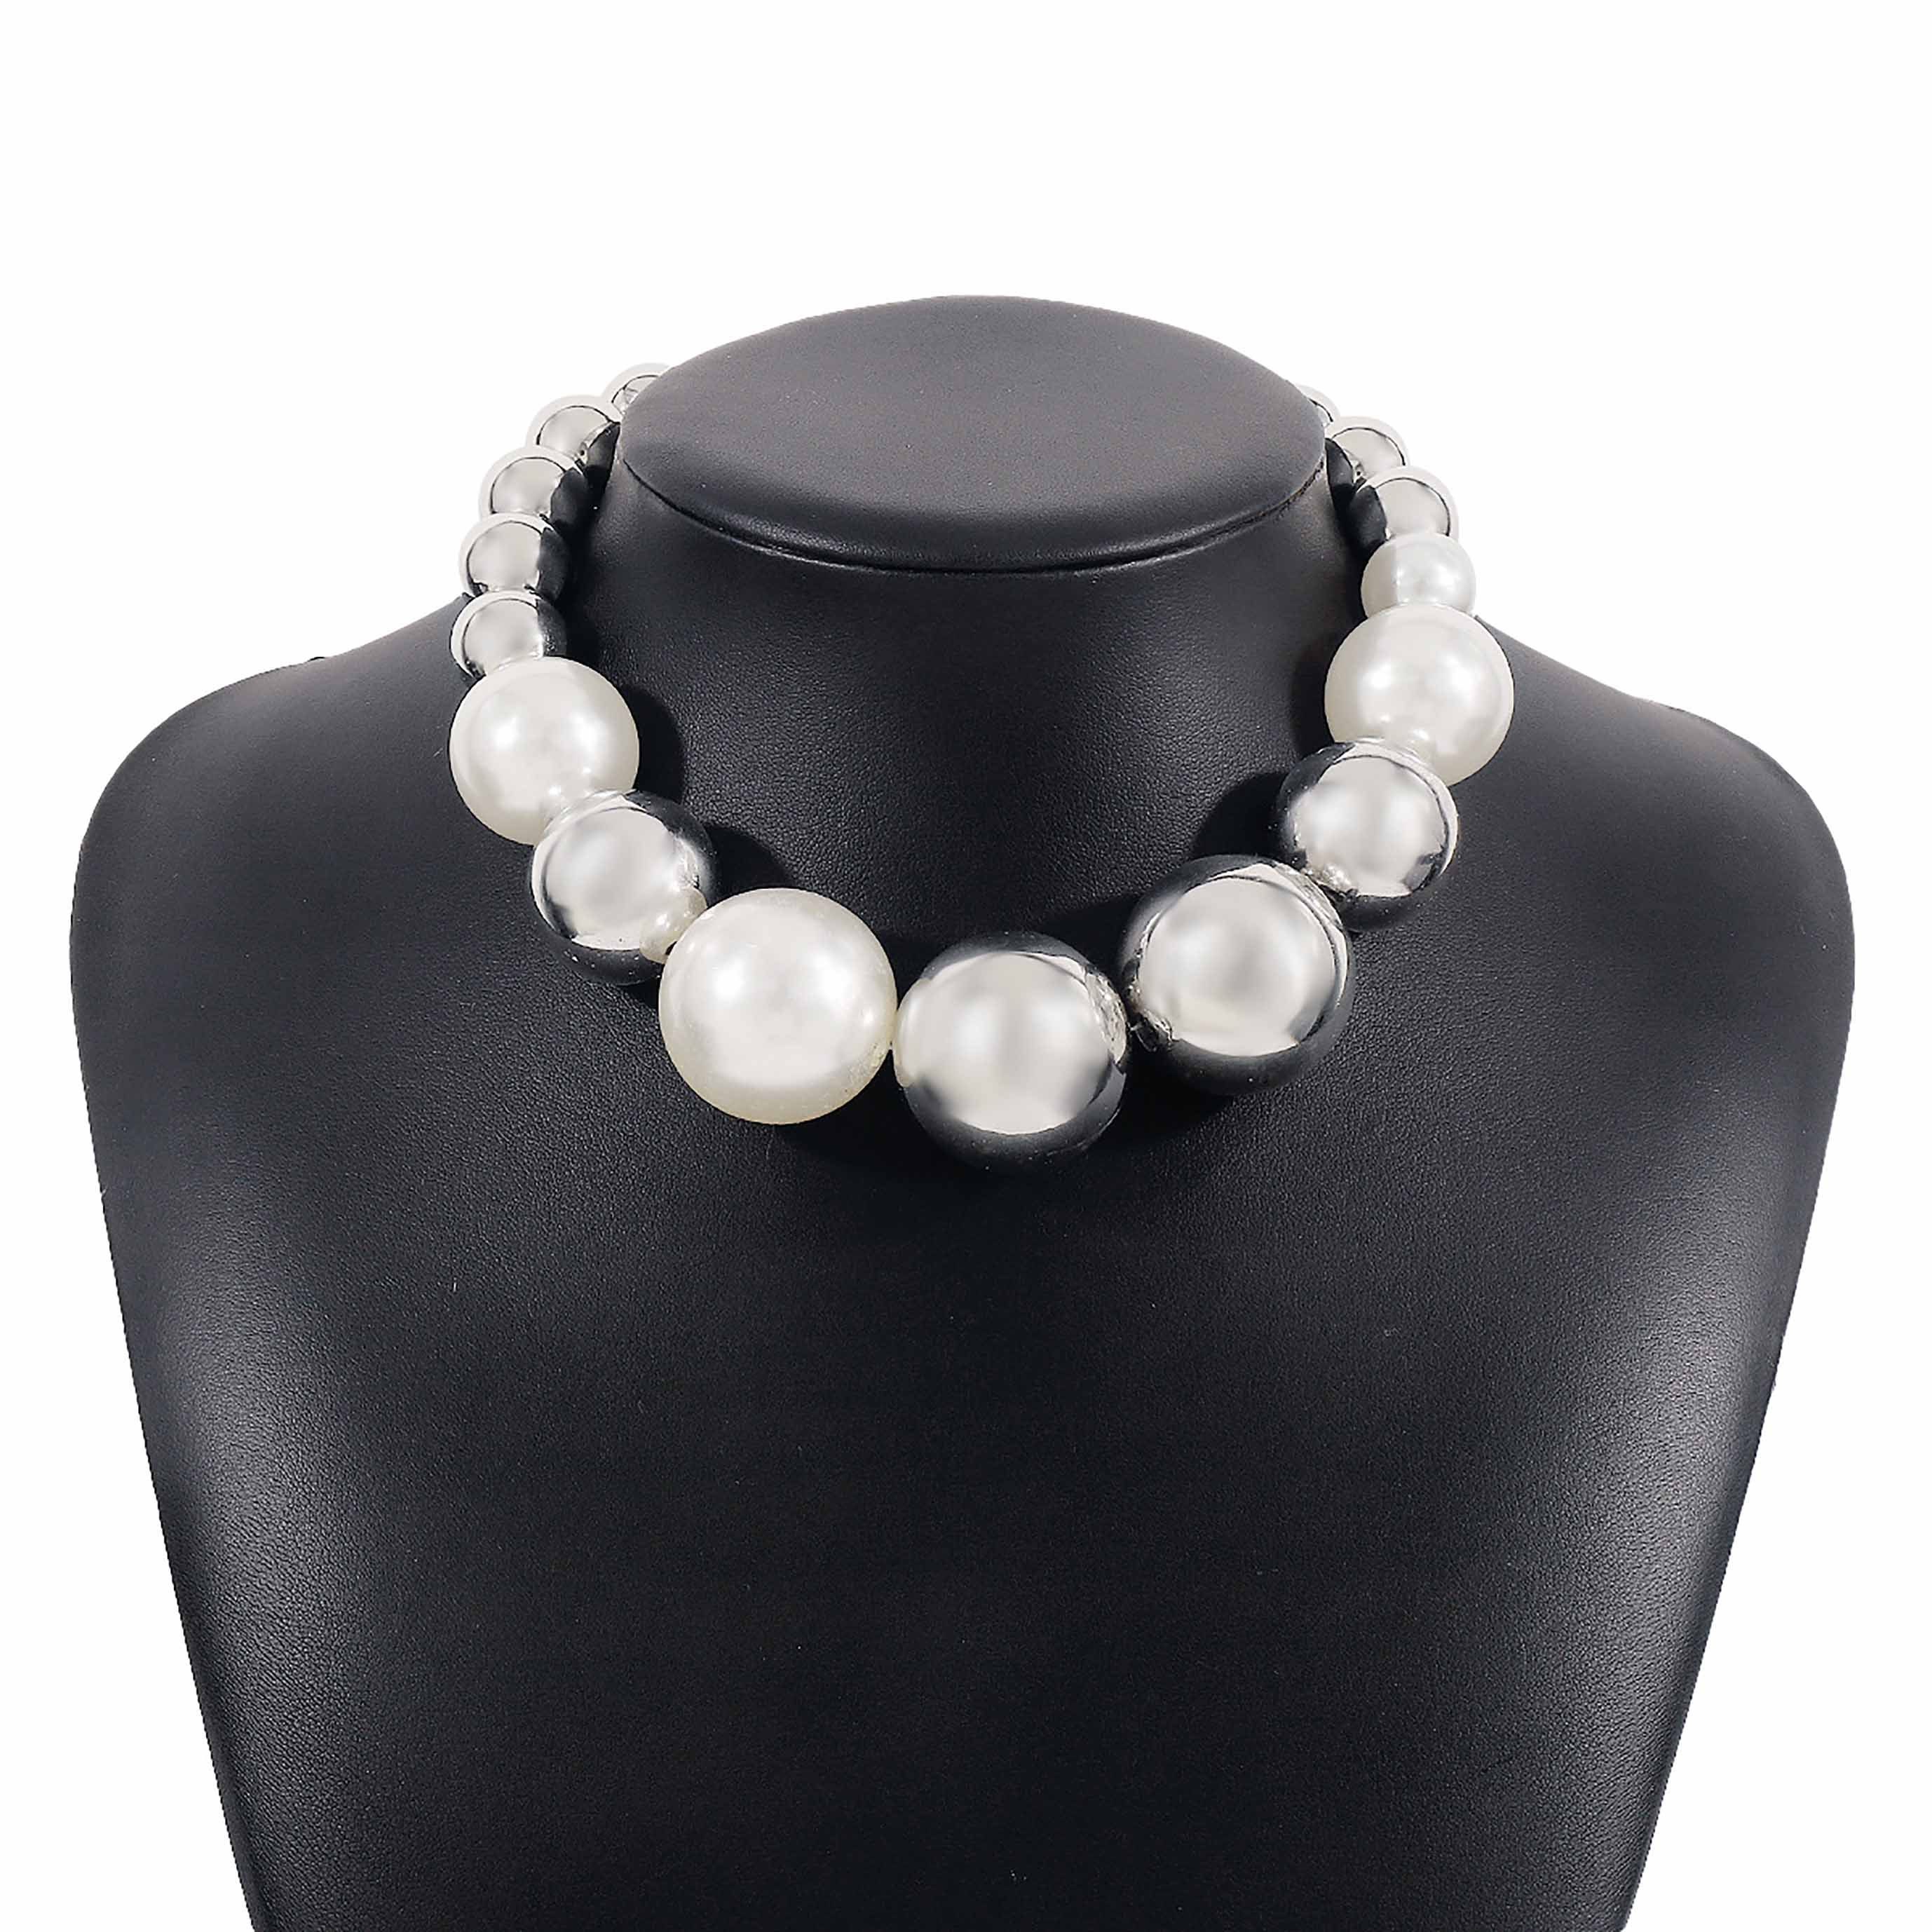 SRRINM Choker Imitation Perle kreative Halskette Frauen